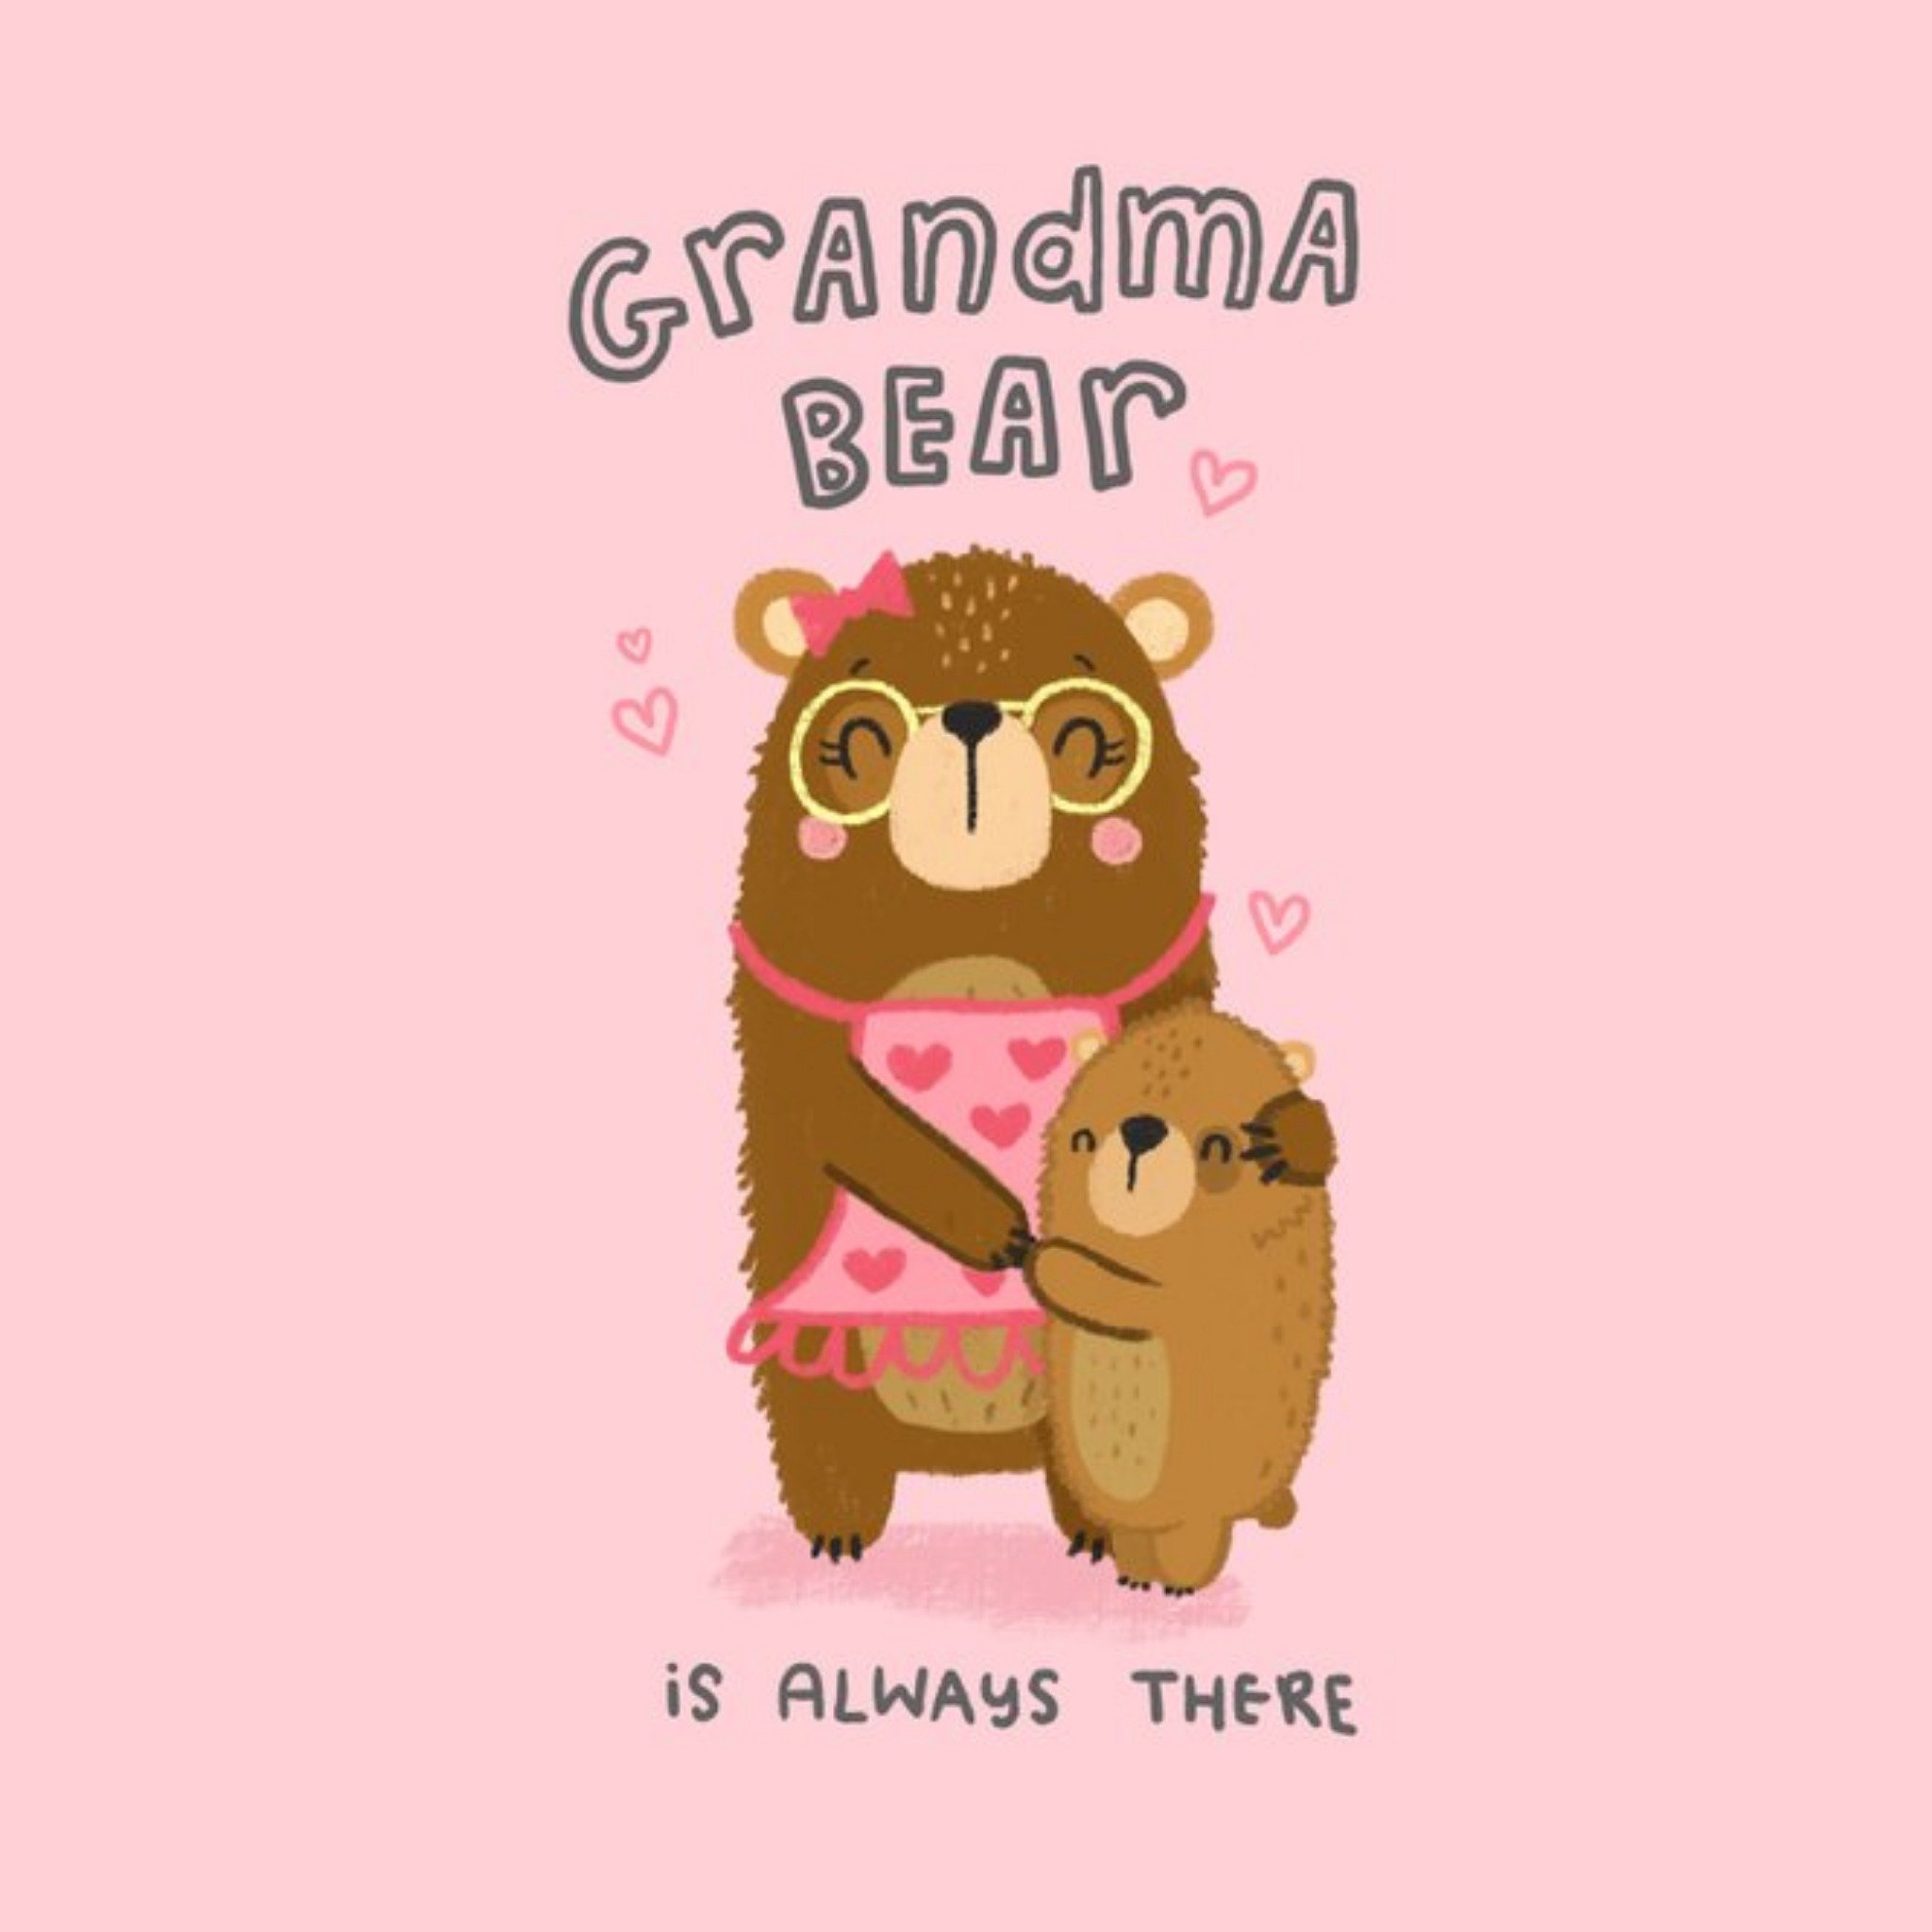 Love Hearts Blue Kiwi Illustration Cute Grandmother Bears Pink Birthday Card, Square